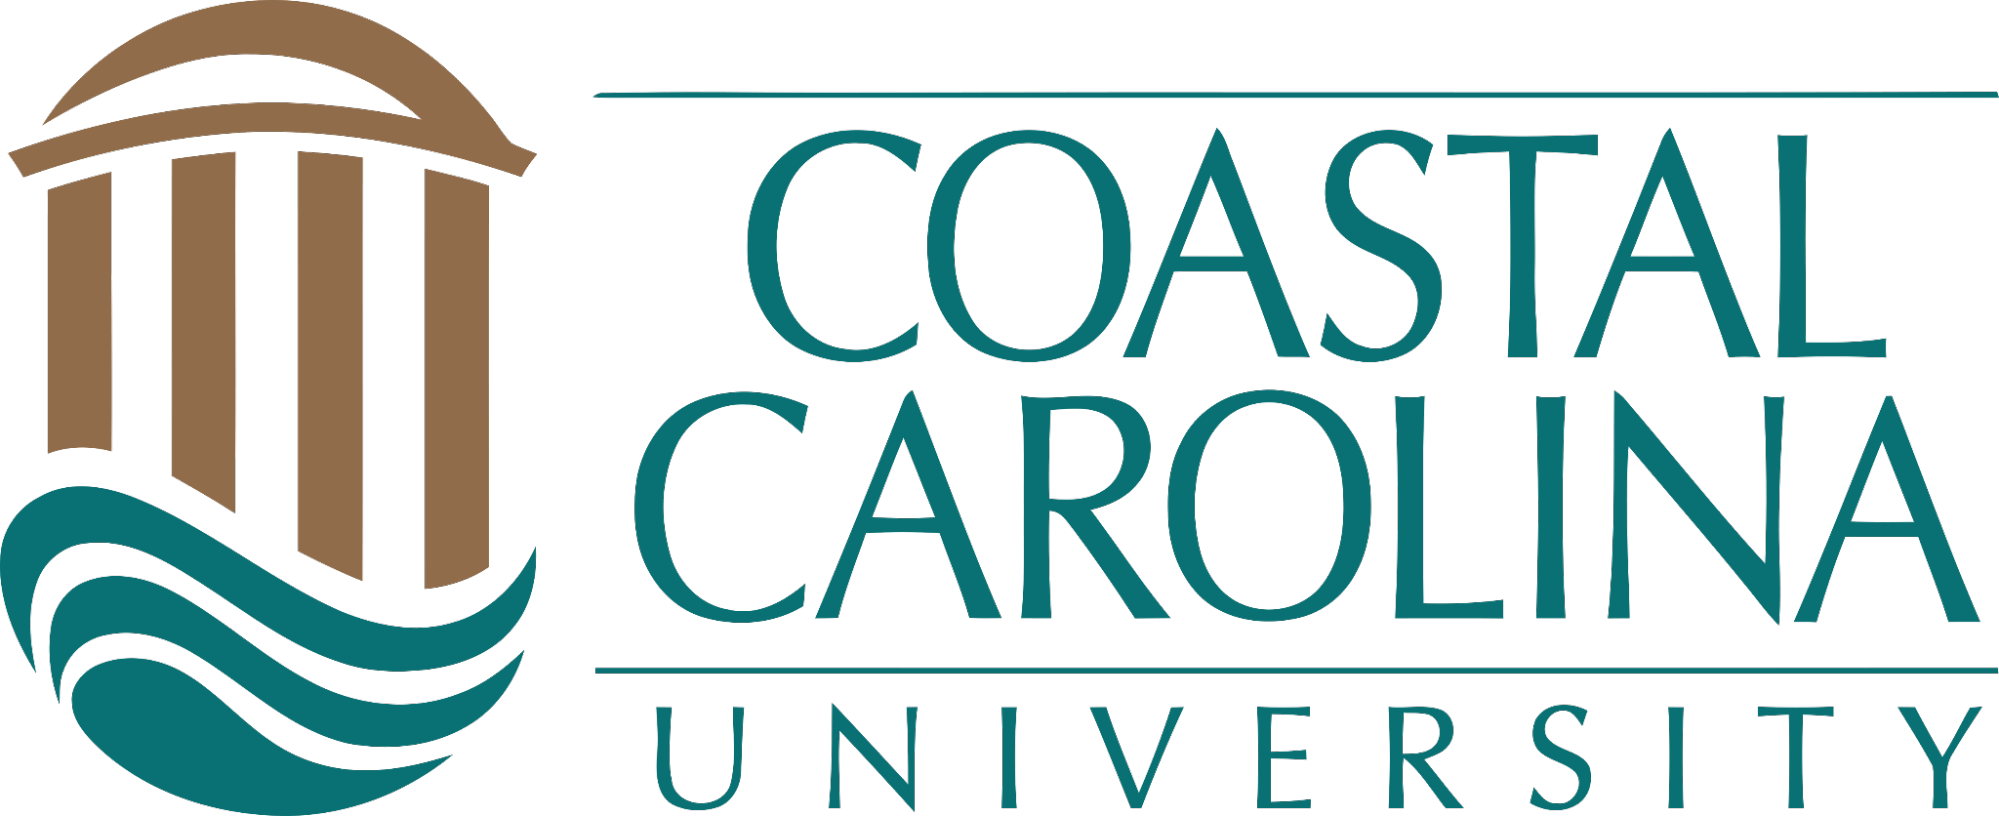 Coastal Carolina University logo.